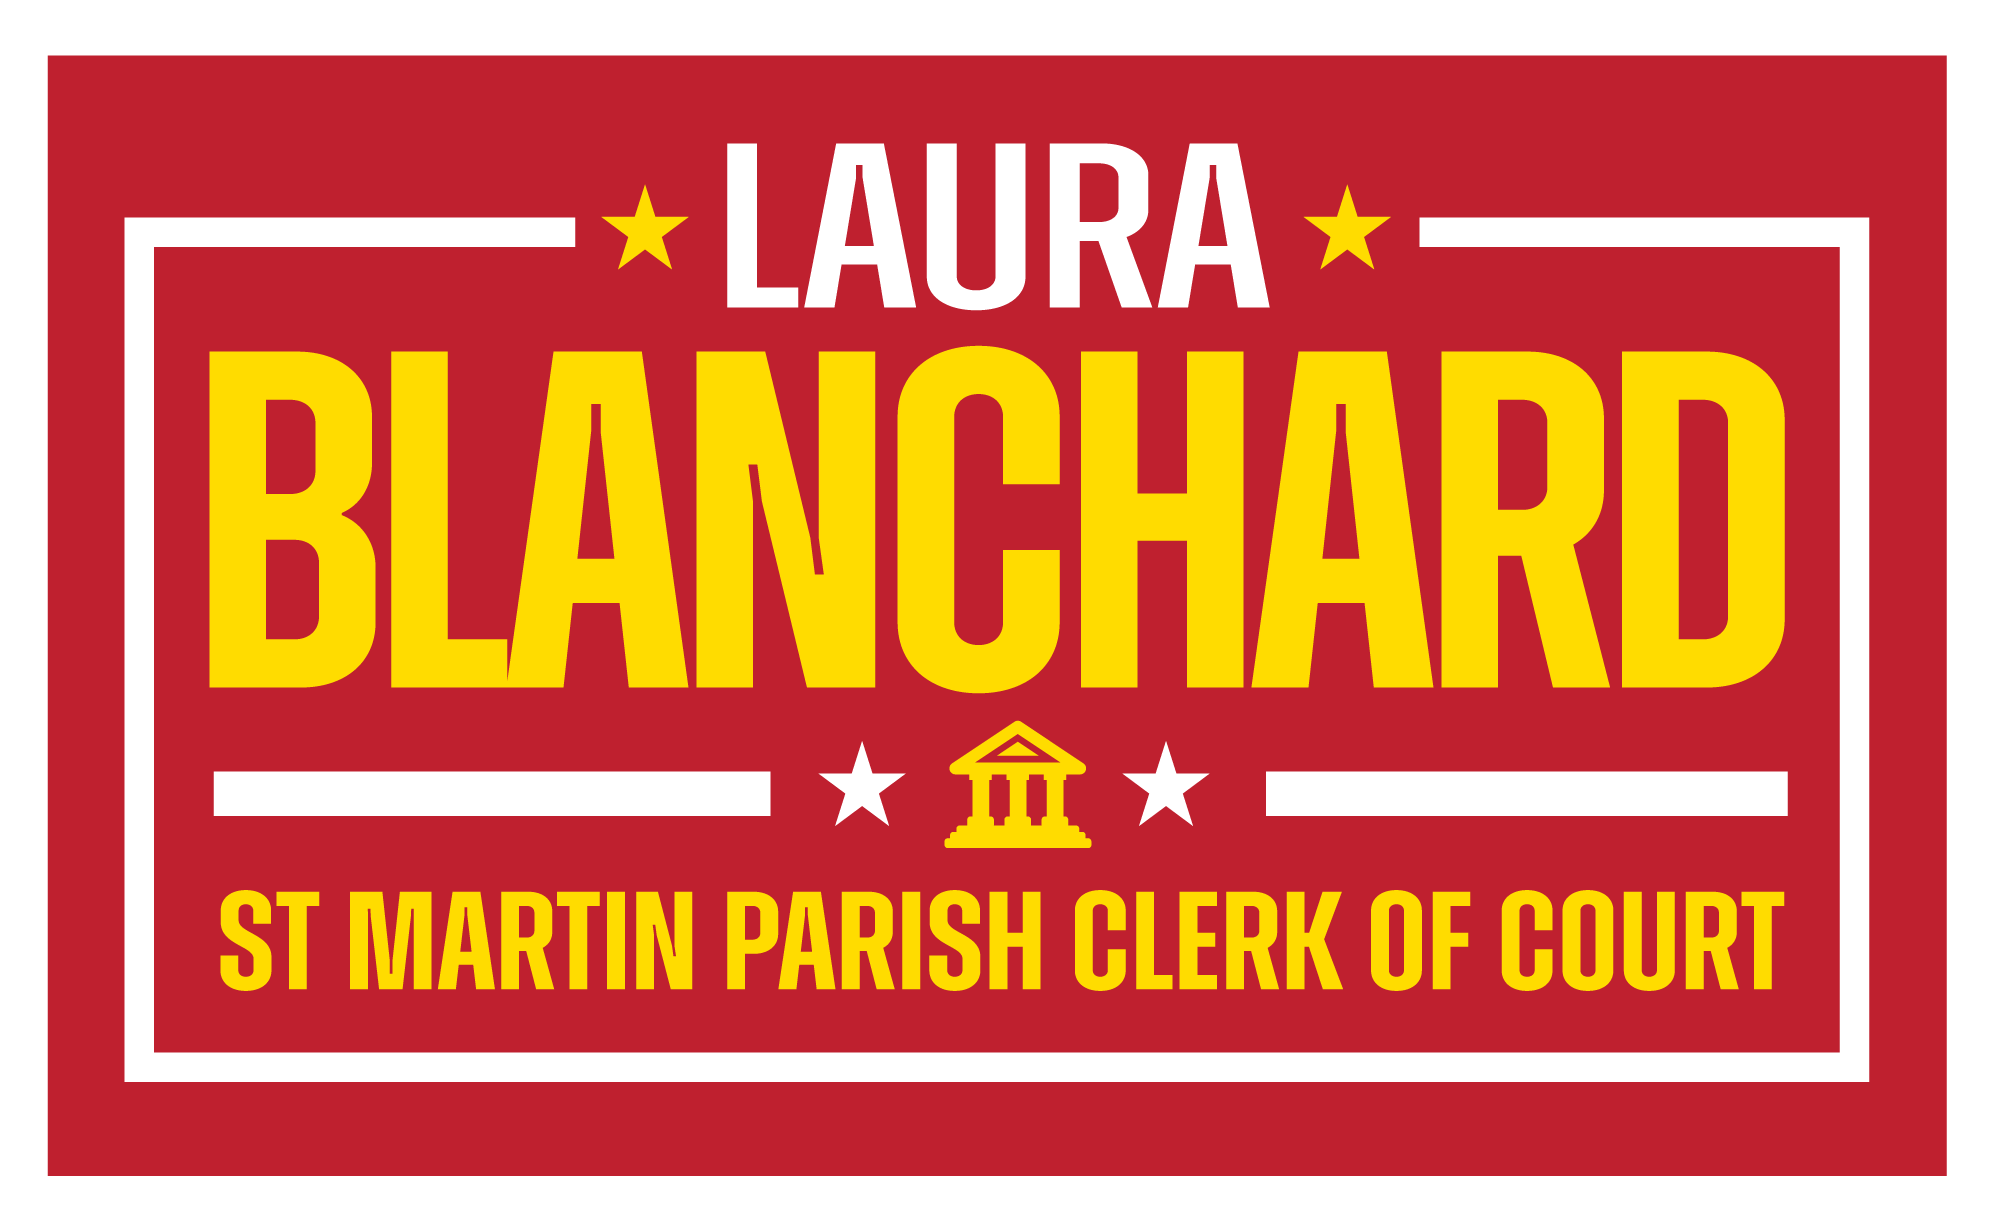 Laura Blanchard for St. Martin Parish Clerk of Court